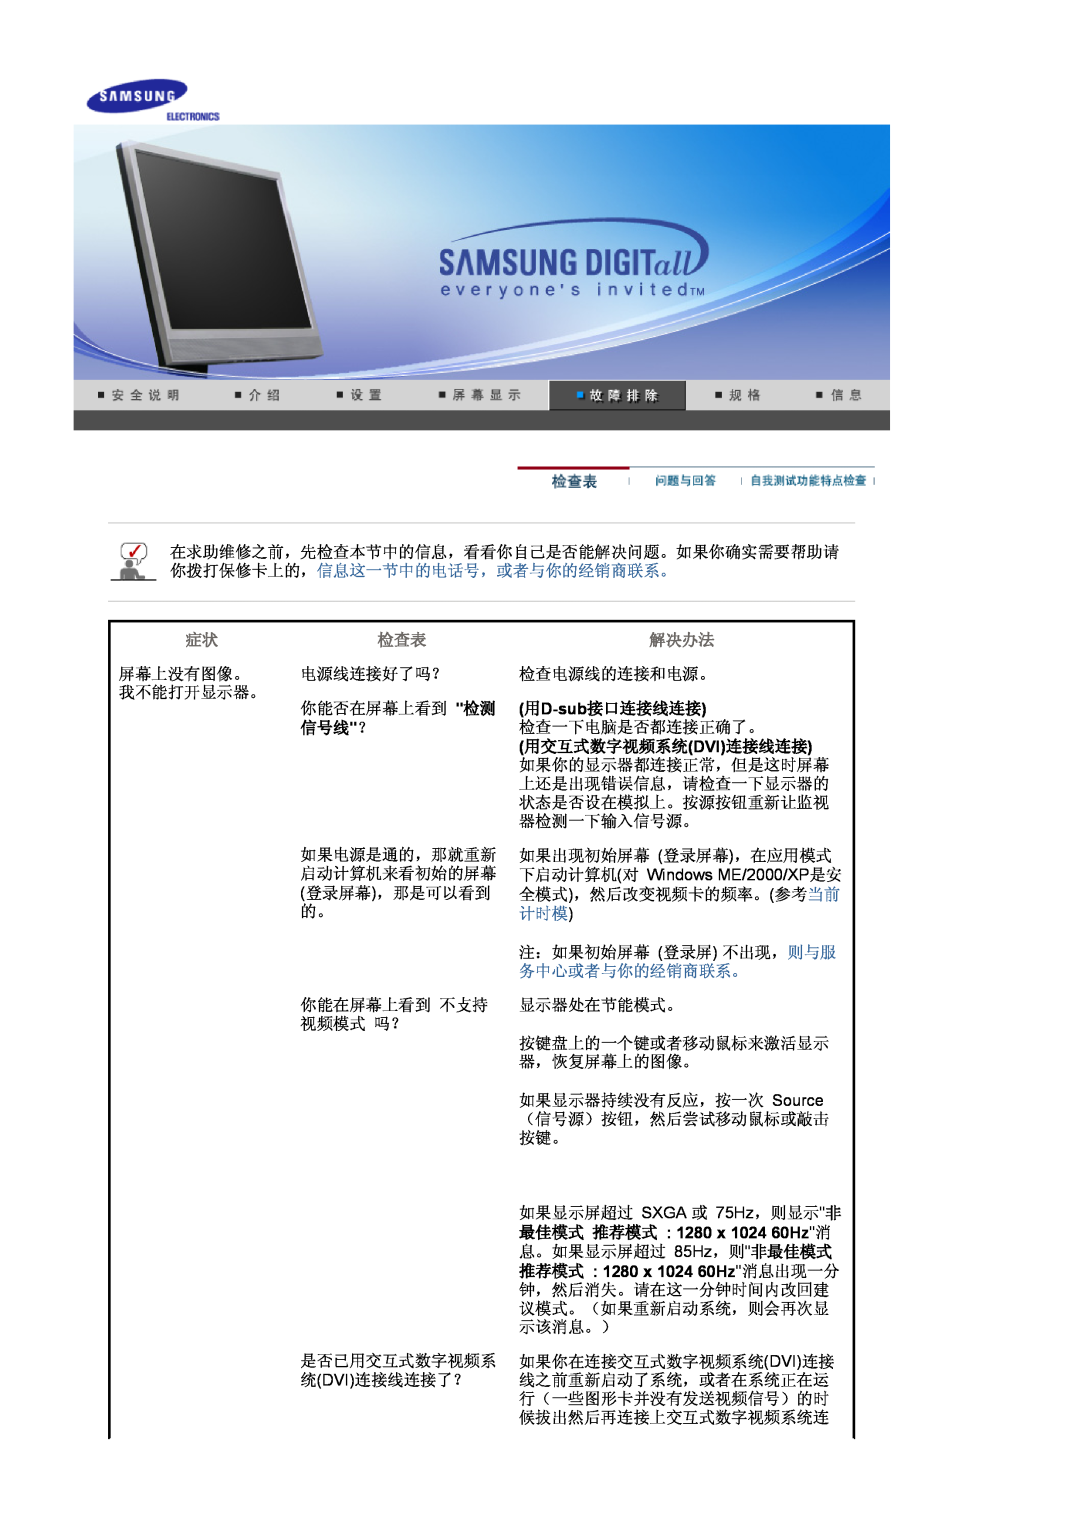 Samsung MJ19MSTSQ/EDC, LS17MJSTSE/EDC   Windows ME/2000/XP, Source, SXGA 75Hz, 85Hz, Dvi Dvi,  1280 x 1024 60Hz 